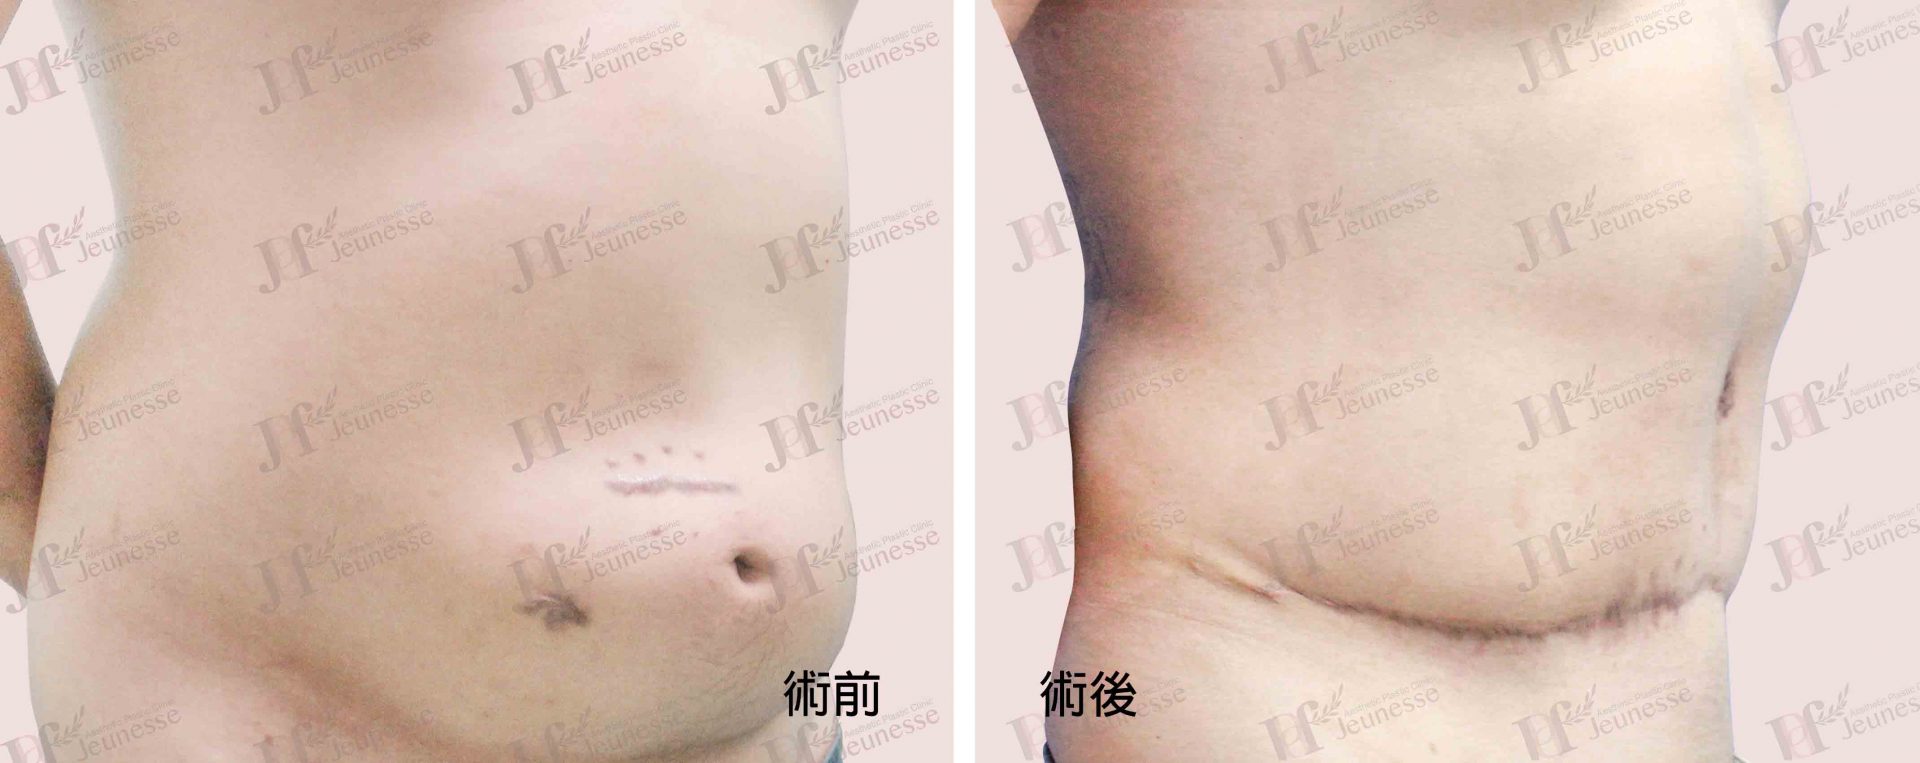 Abdominoplasty腹部成形術及抽脂手術 case 2 45度-浮水印